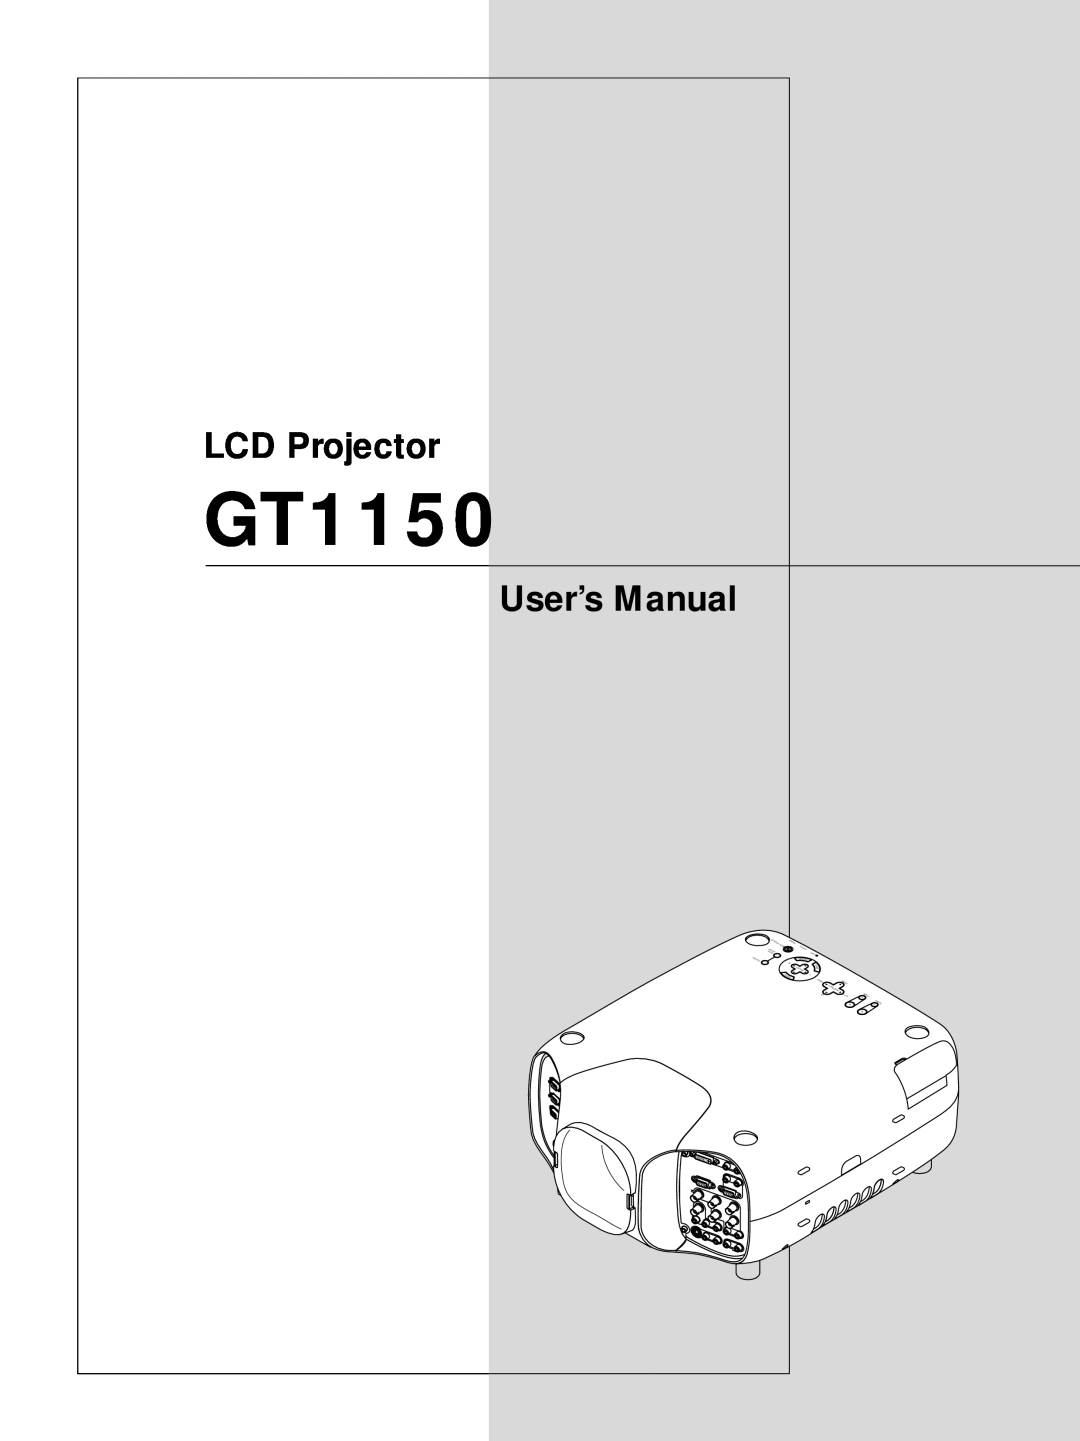 NEC GT1150 user manual LCD Projector, User’s Manual 